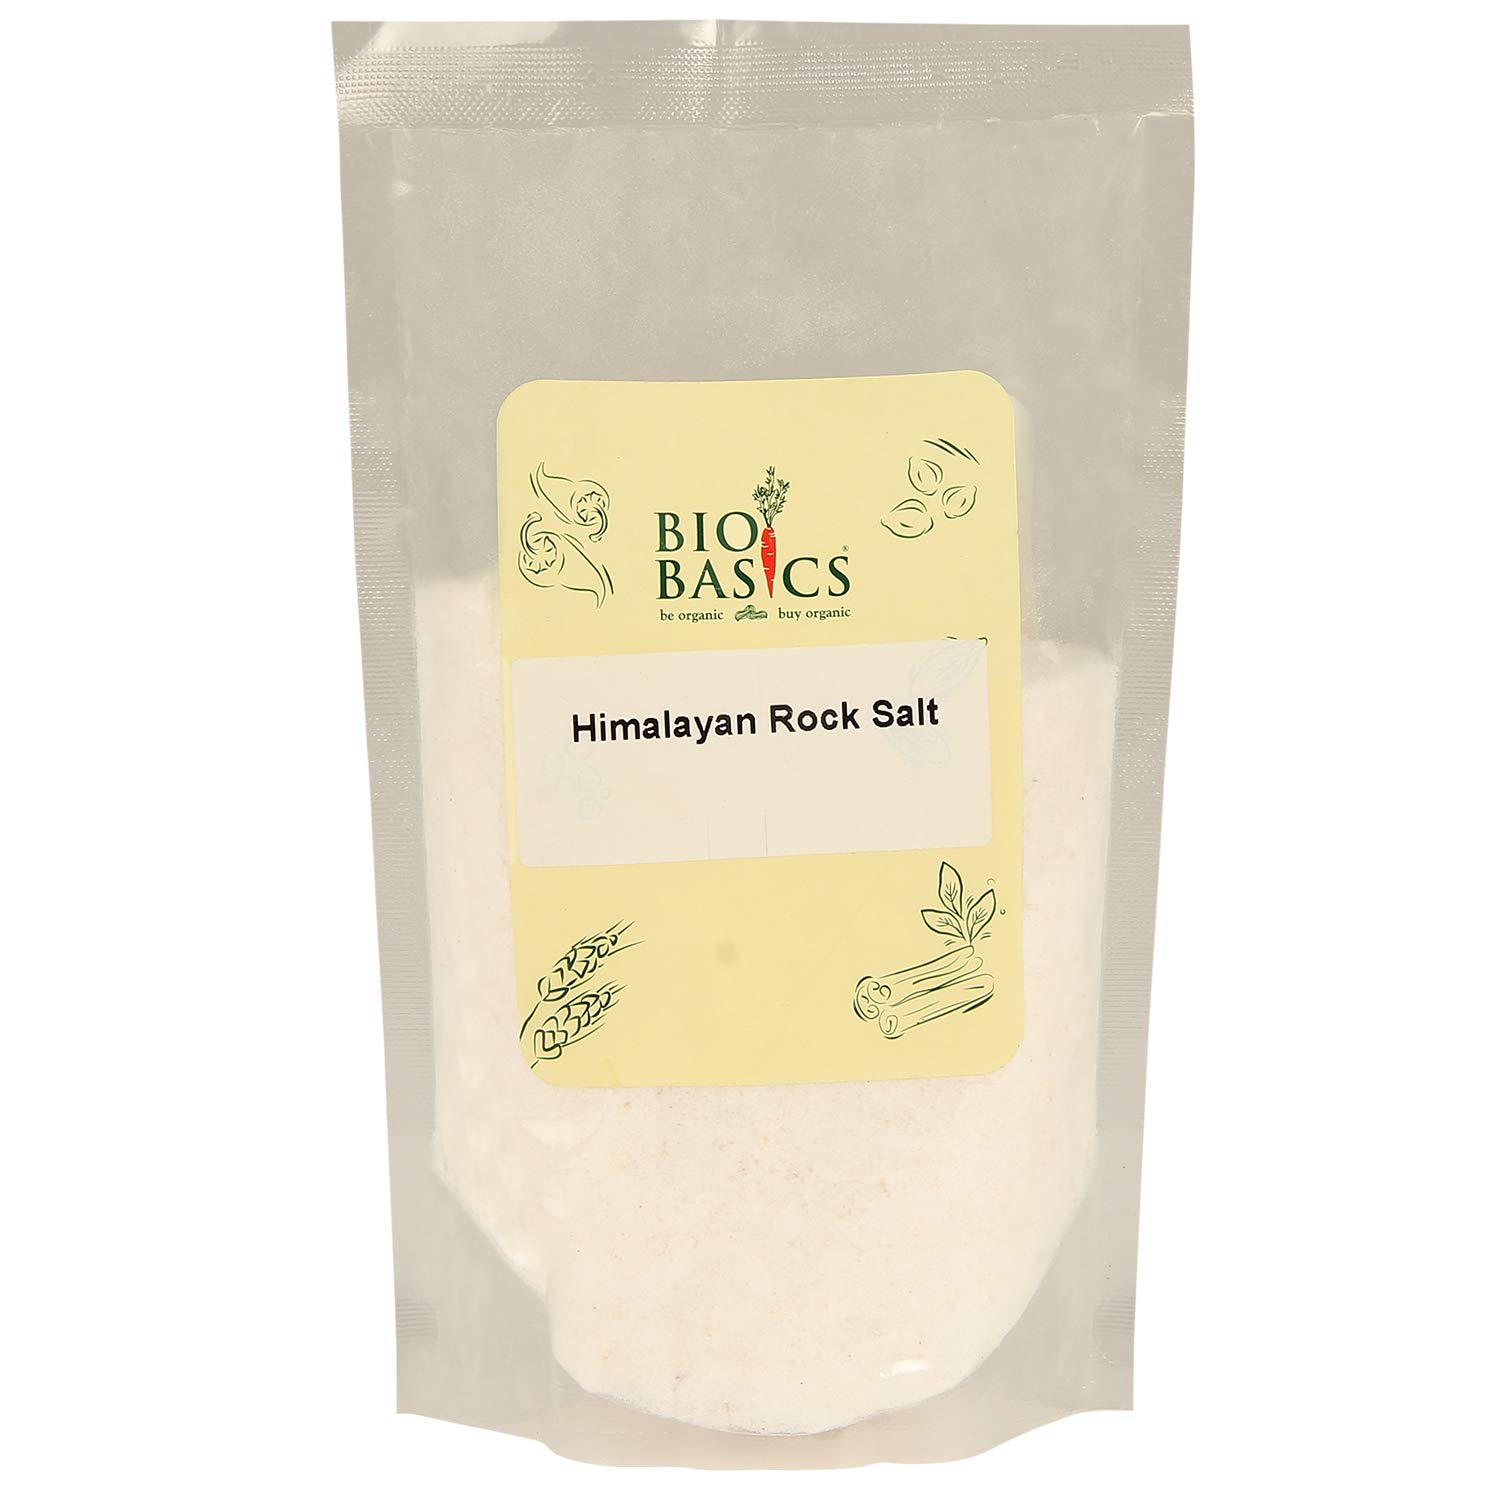 Product: Biobasics Himalayan Rock Salt Powder, 500g | Ethically sourced from Bio Basics